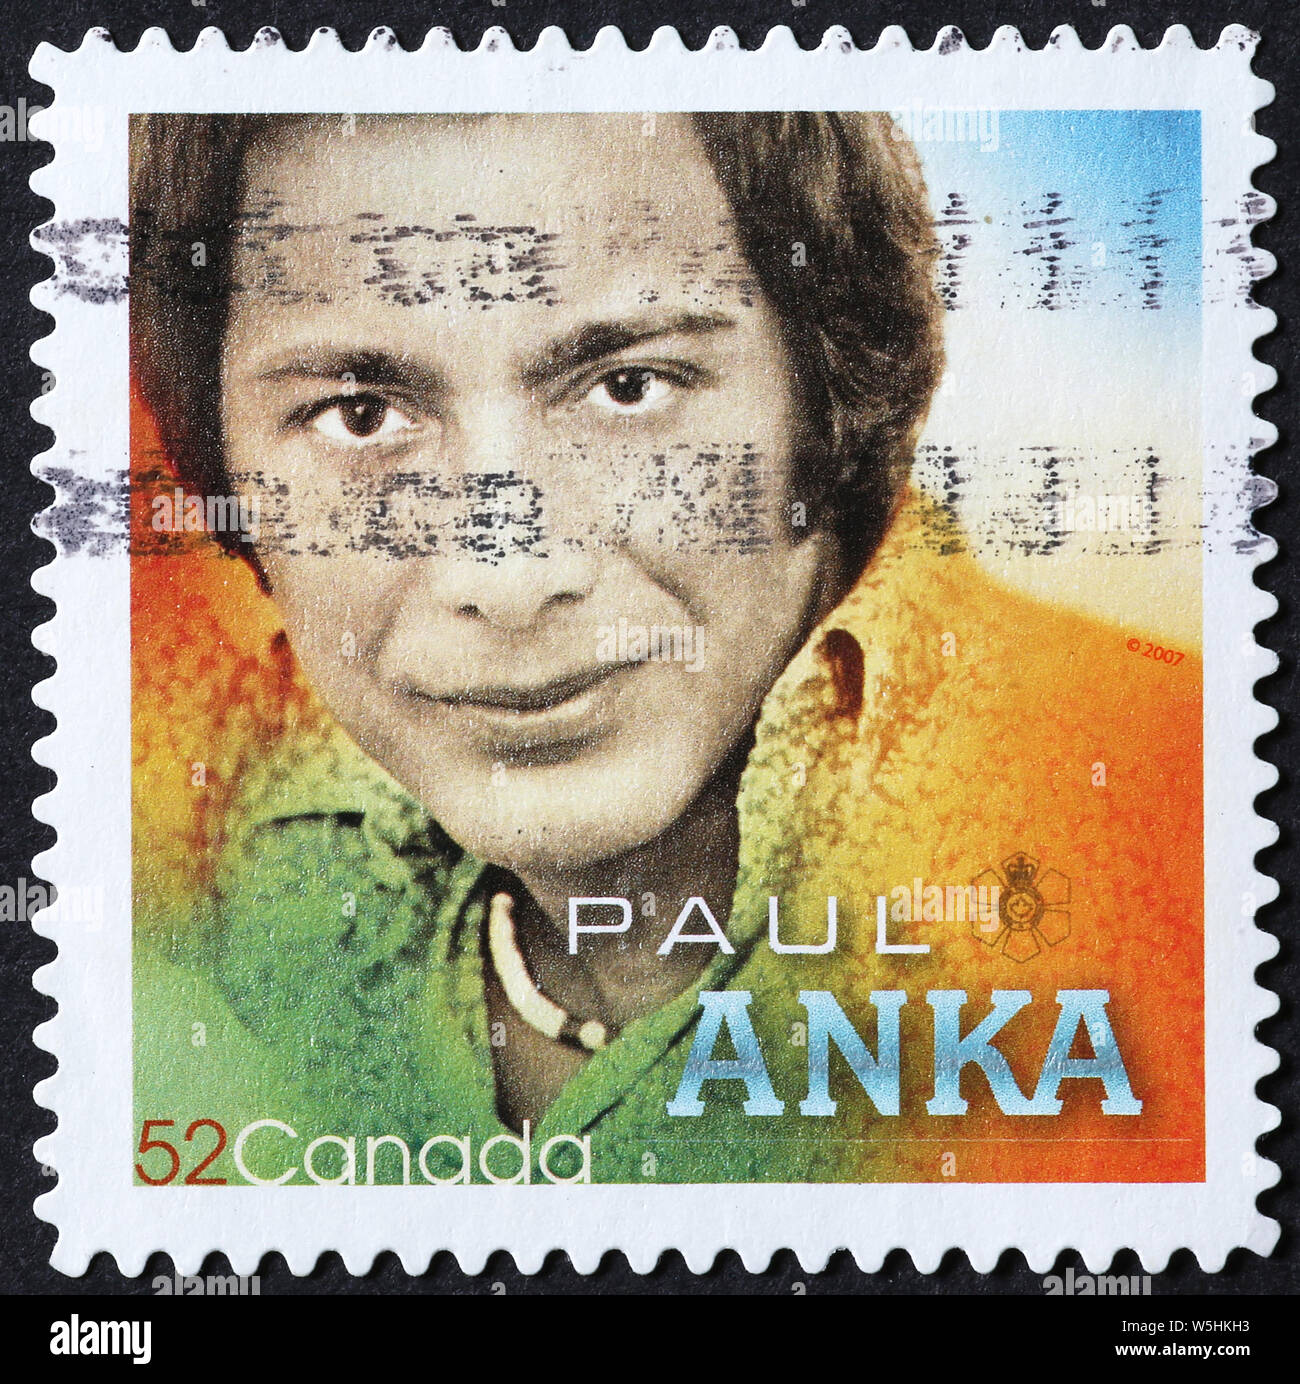 Paul Anka on canadian postage stamp Stock Photo